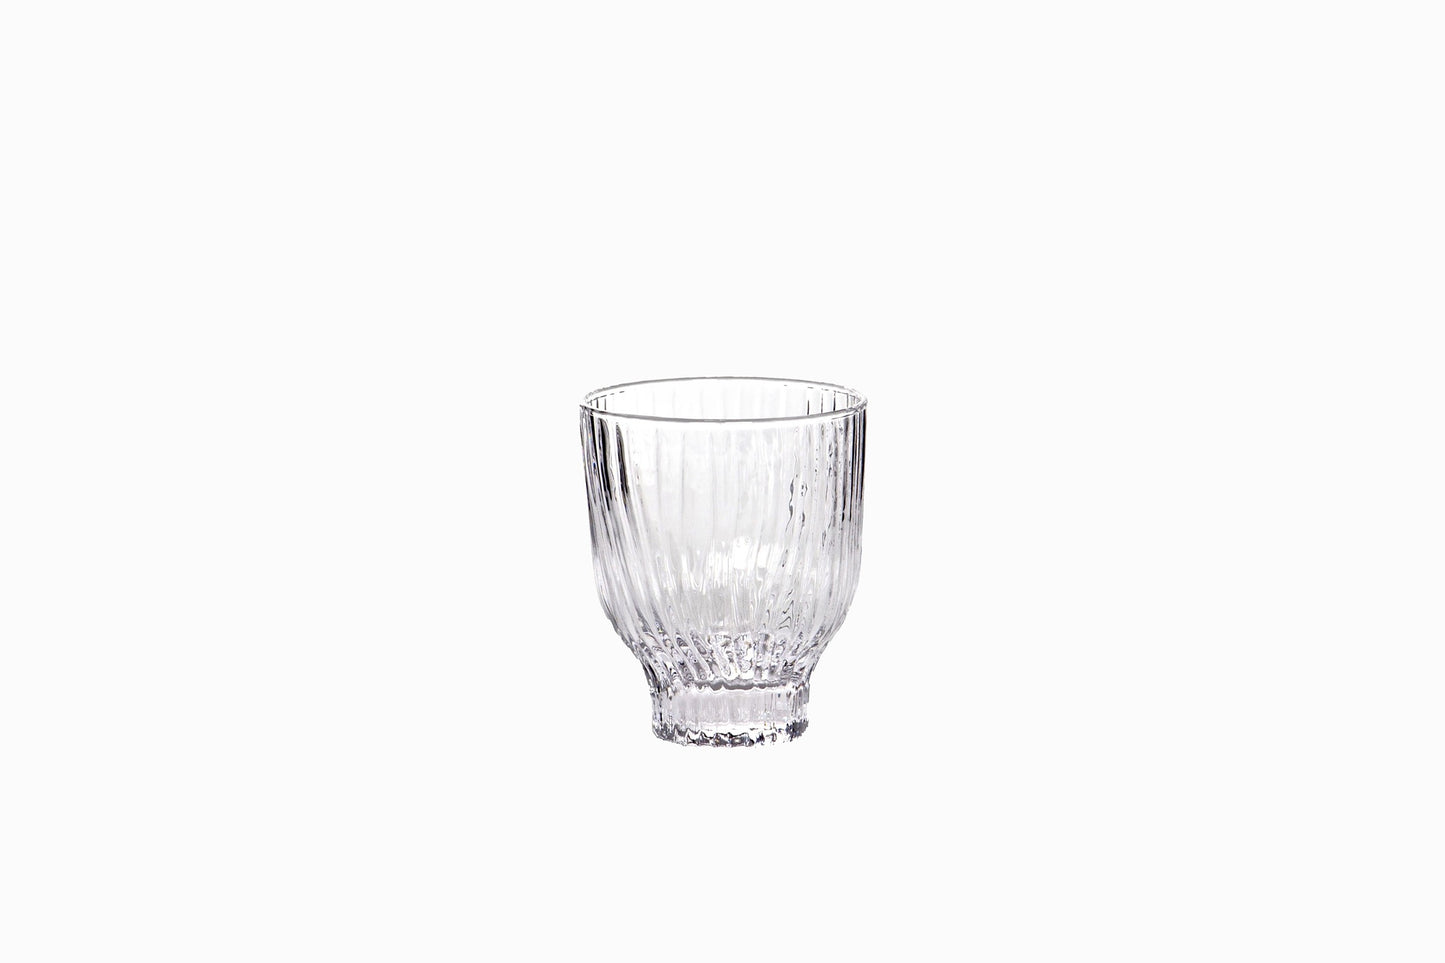 Vaso cristal ranurado 300ml transparente